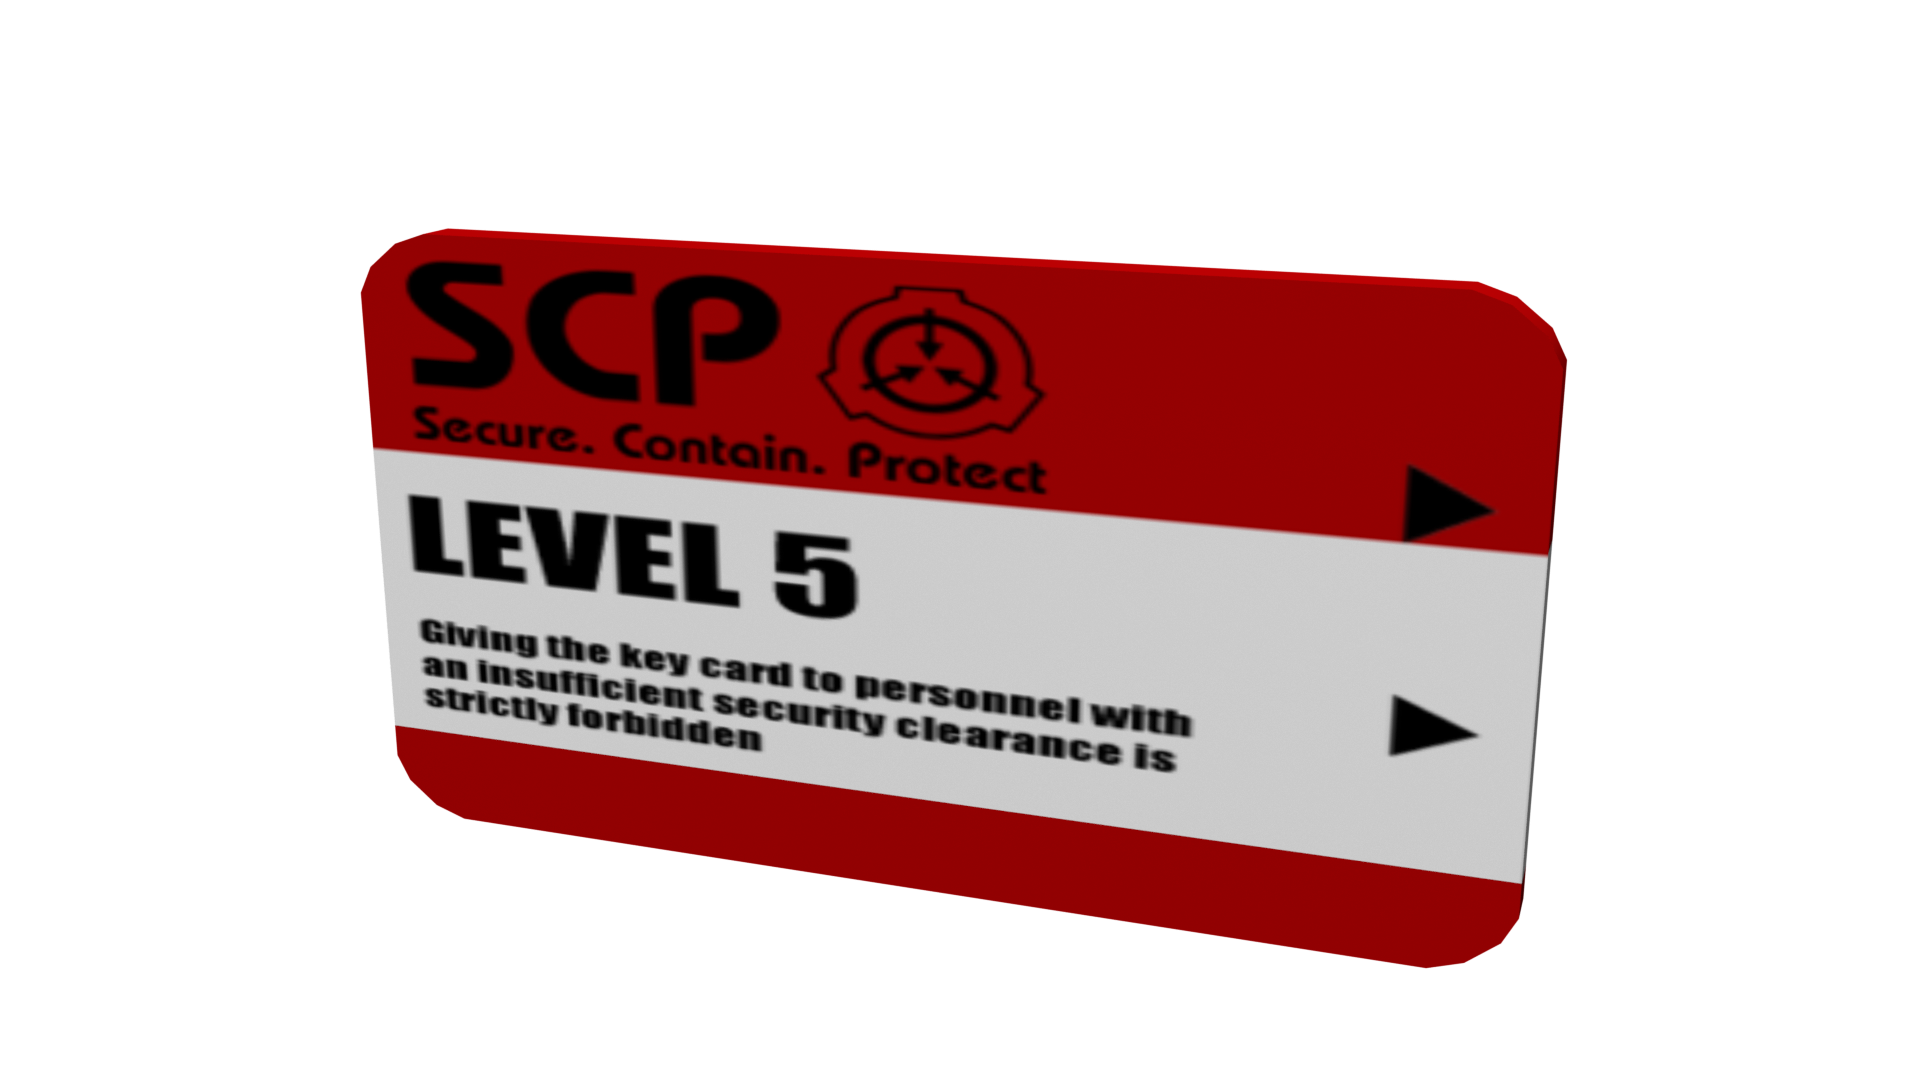 SCP Keycard Level 5. Карта SCP o5. Карты допуска SCP. Ключ карта SCP. Ключ карта достань